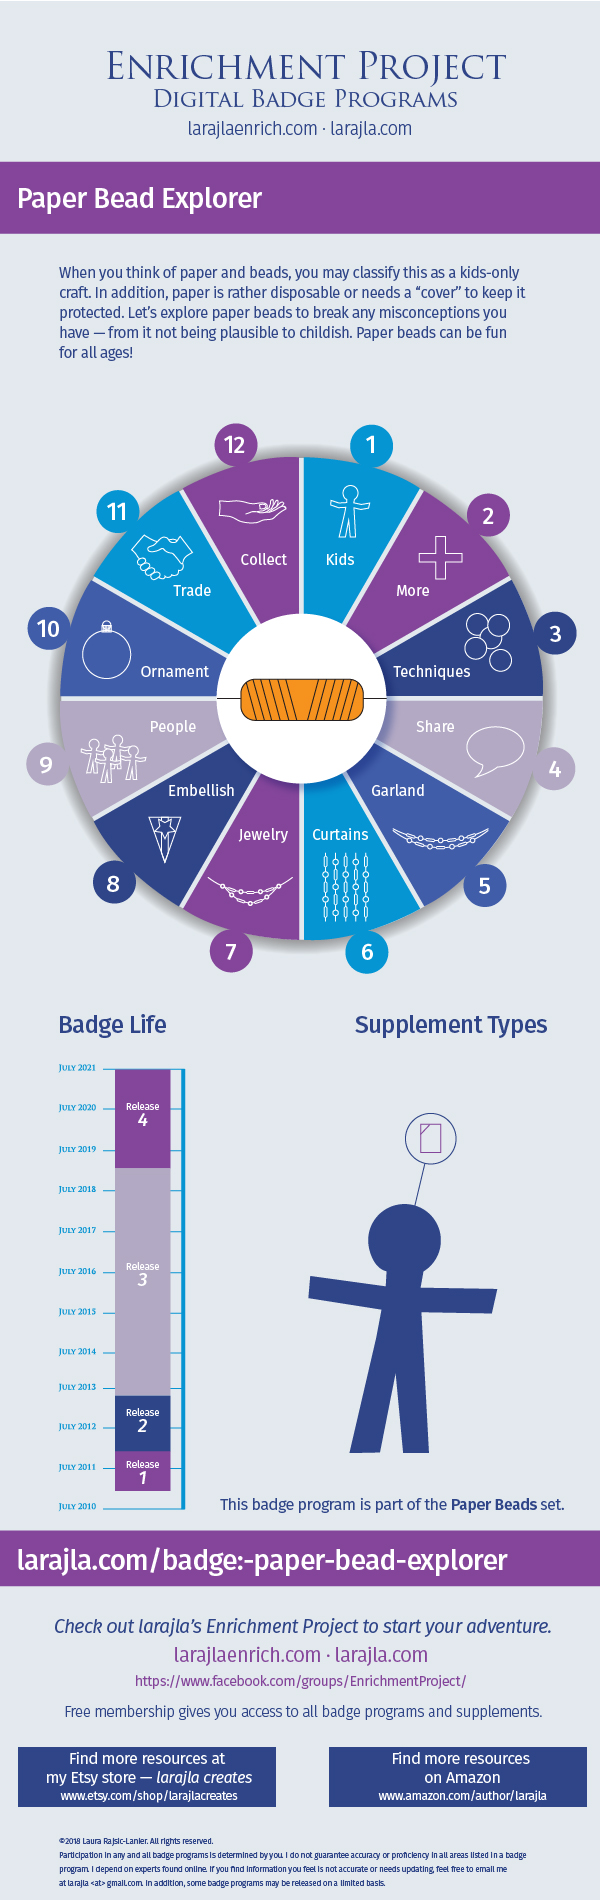 Infographic: Paper Bead Explorer Badge Program